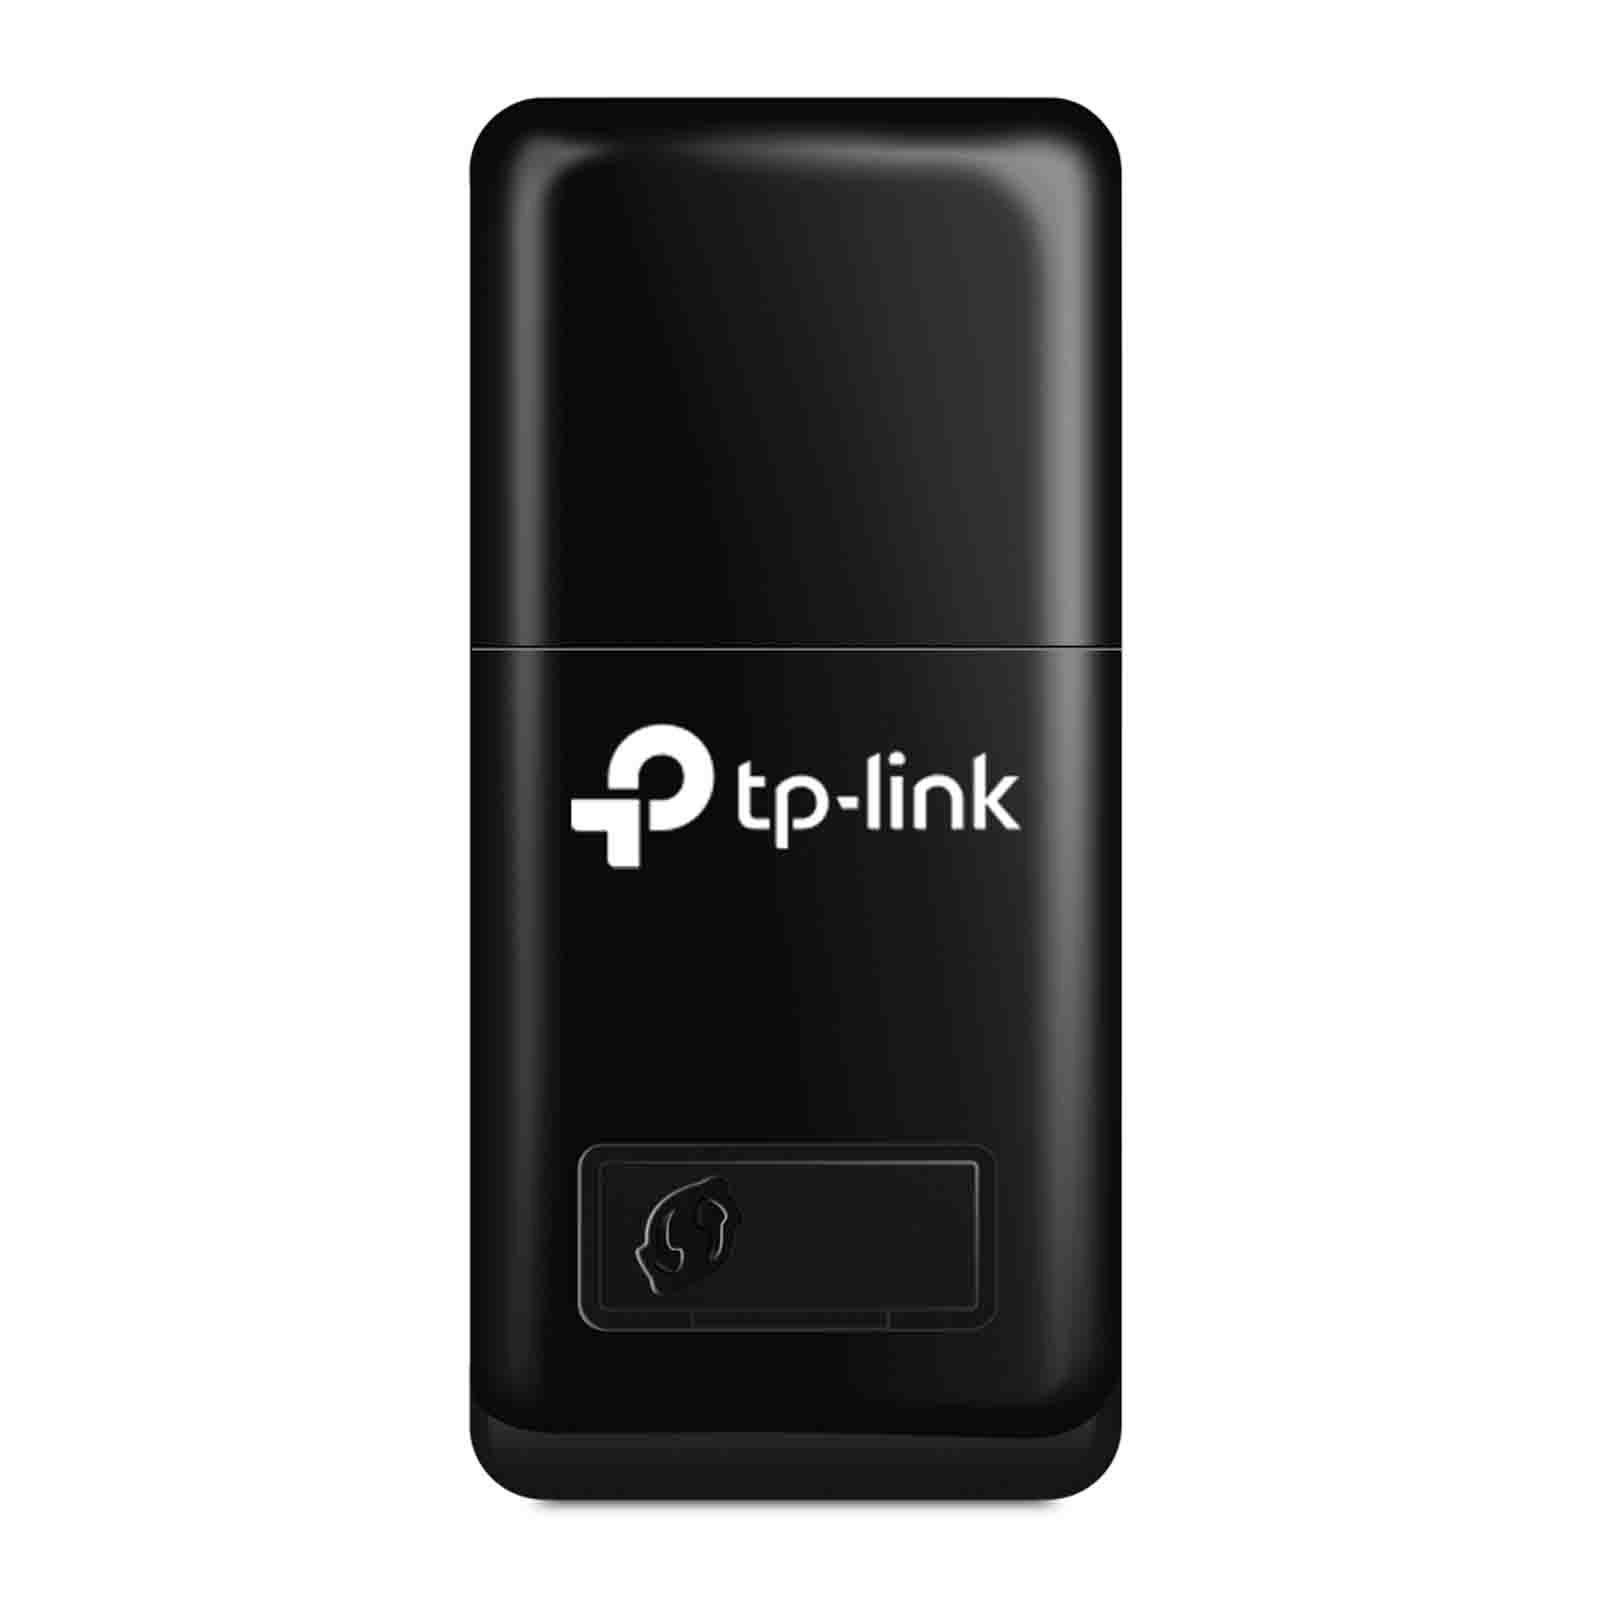 TP-Link TL-WN823N :: wisp.pl